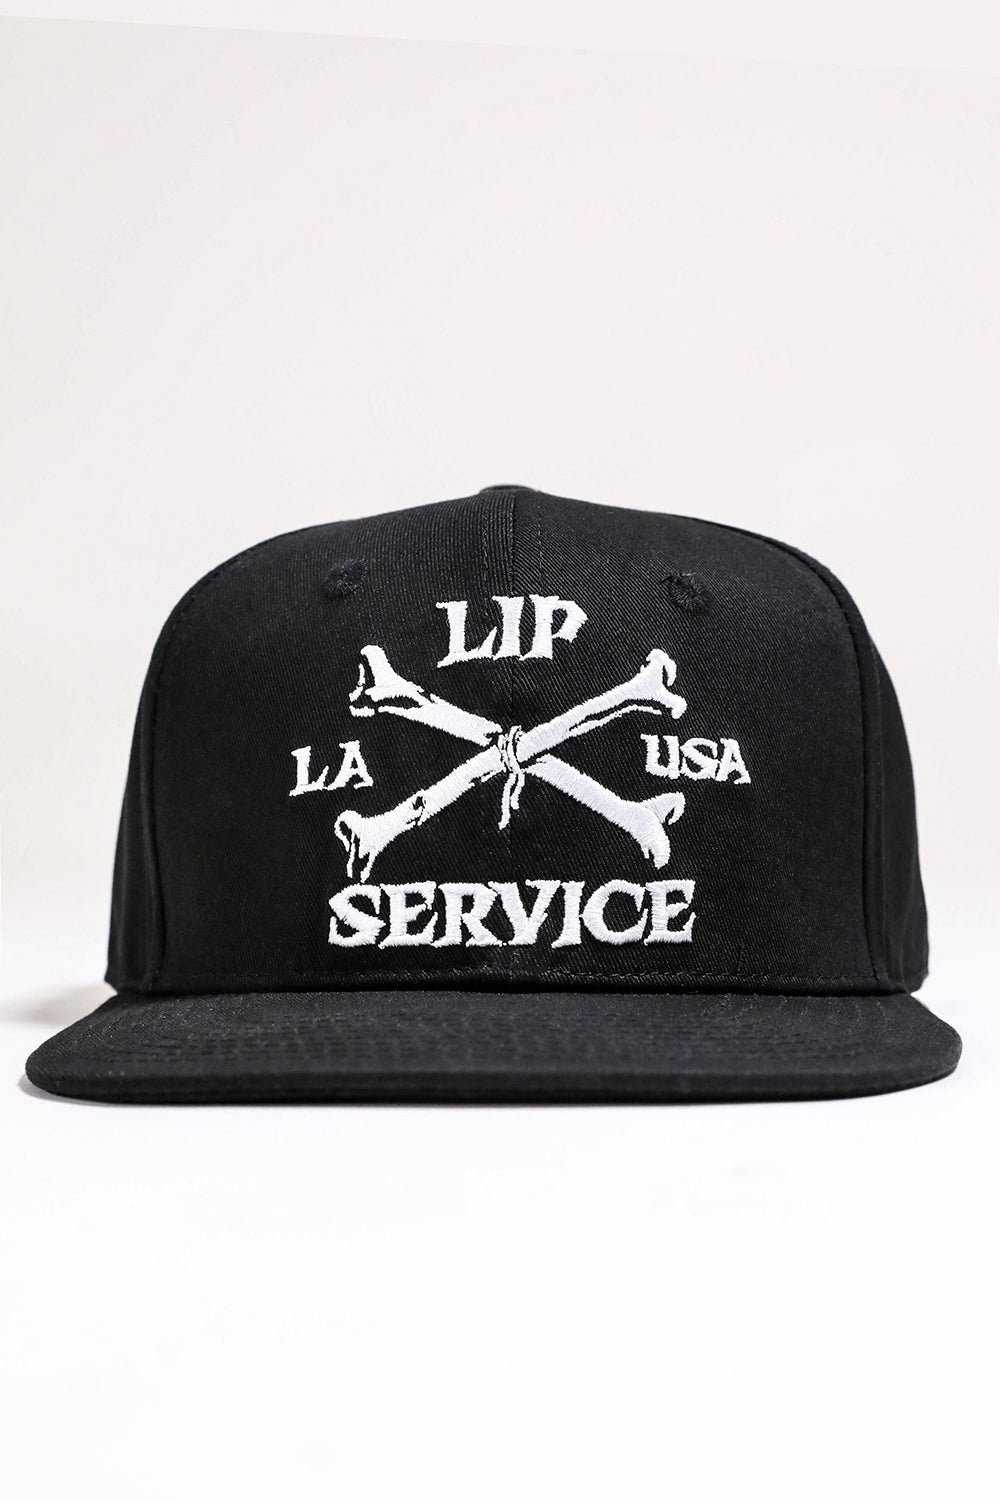 Cross Bones Snapback Baseball Hat B/W-Accessories-Lip Service